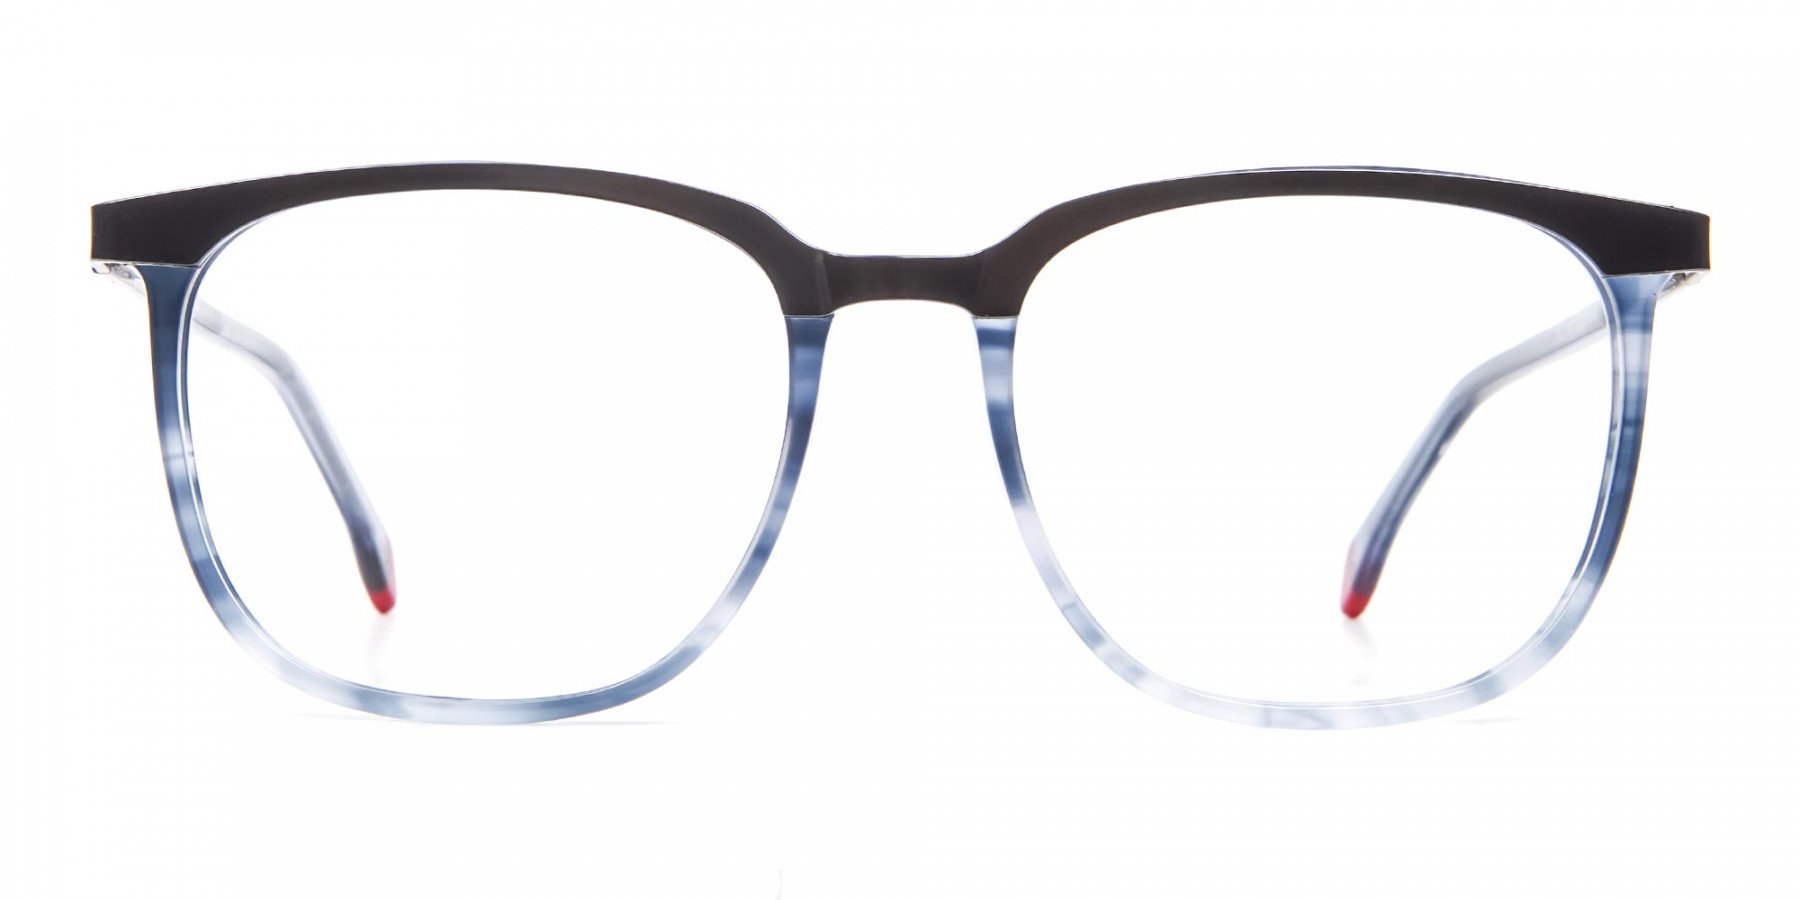 Smoky Blue Framed Glasses